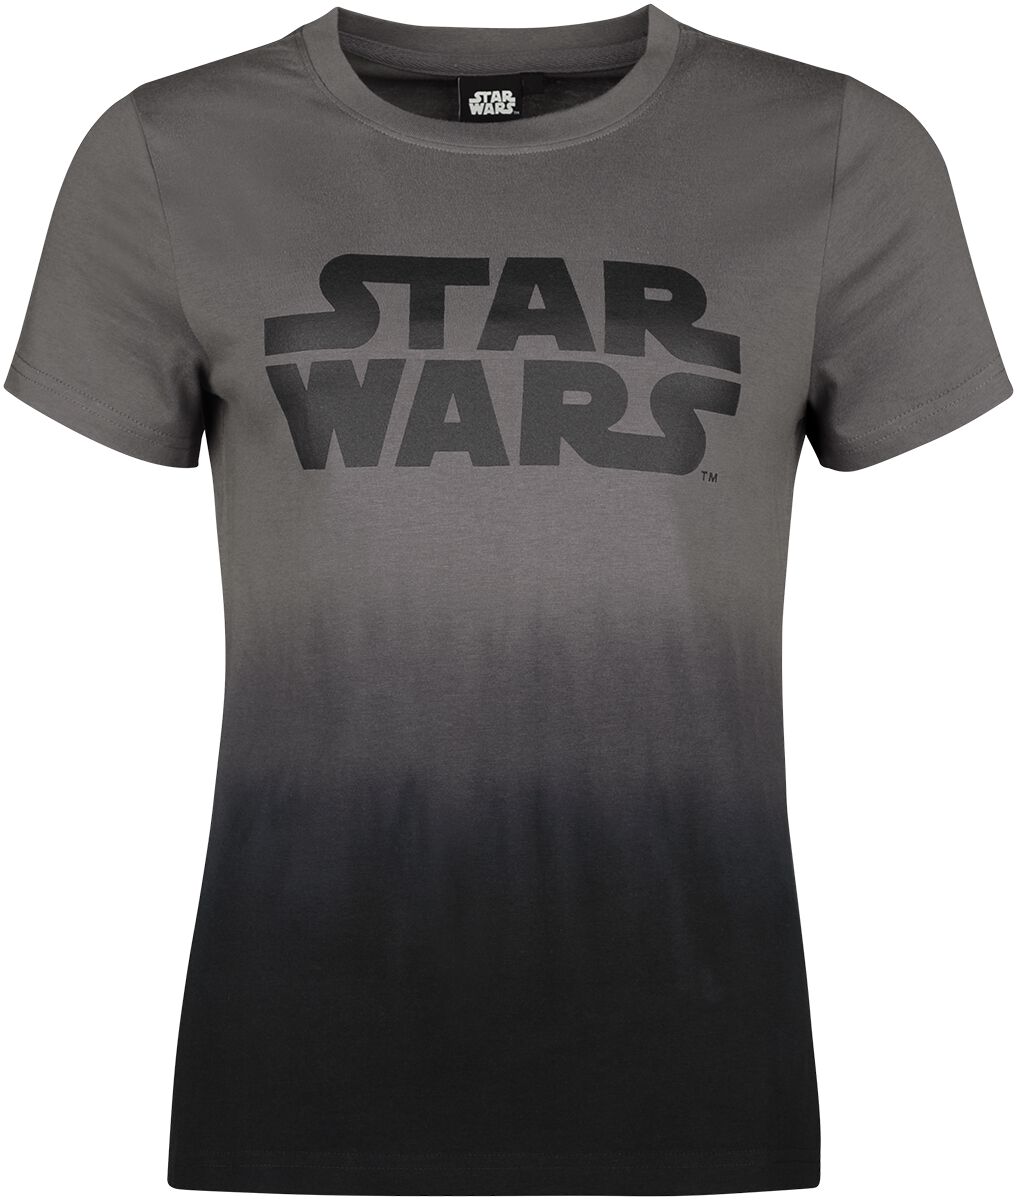 Star Wars Star Wars T-Shirt multicolor in M